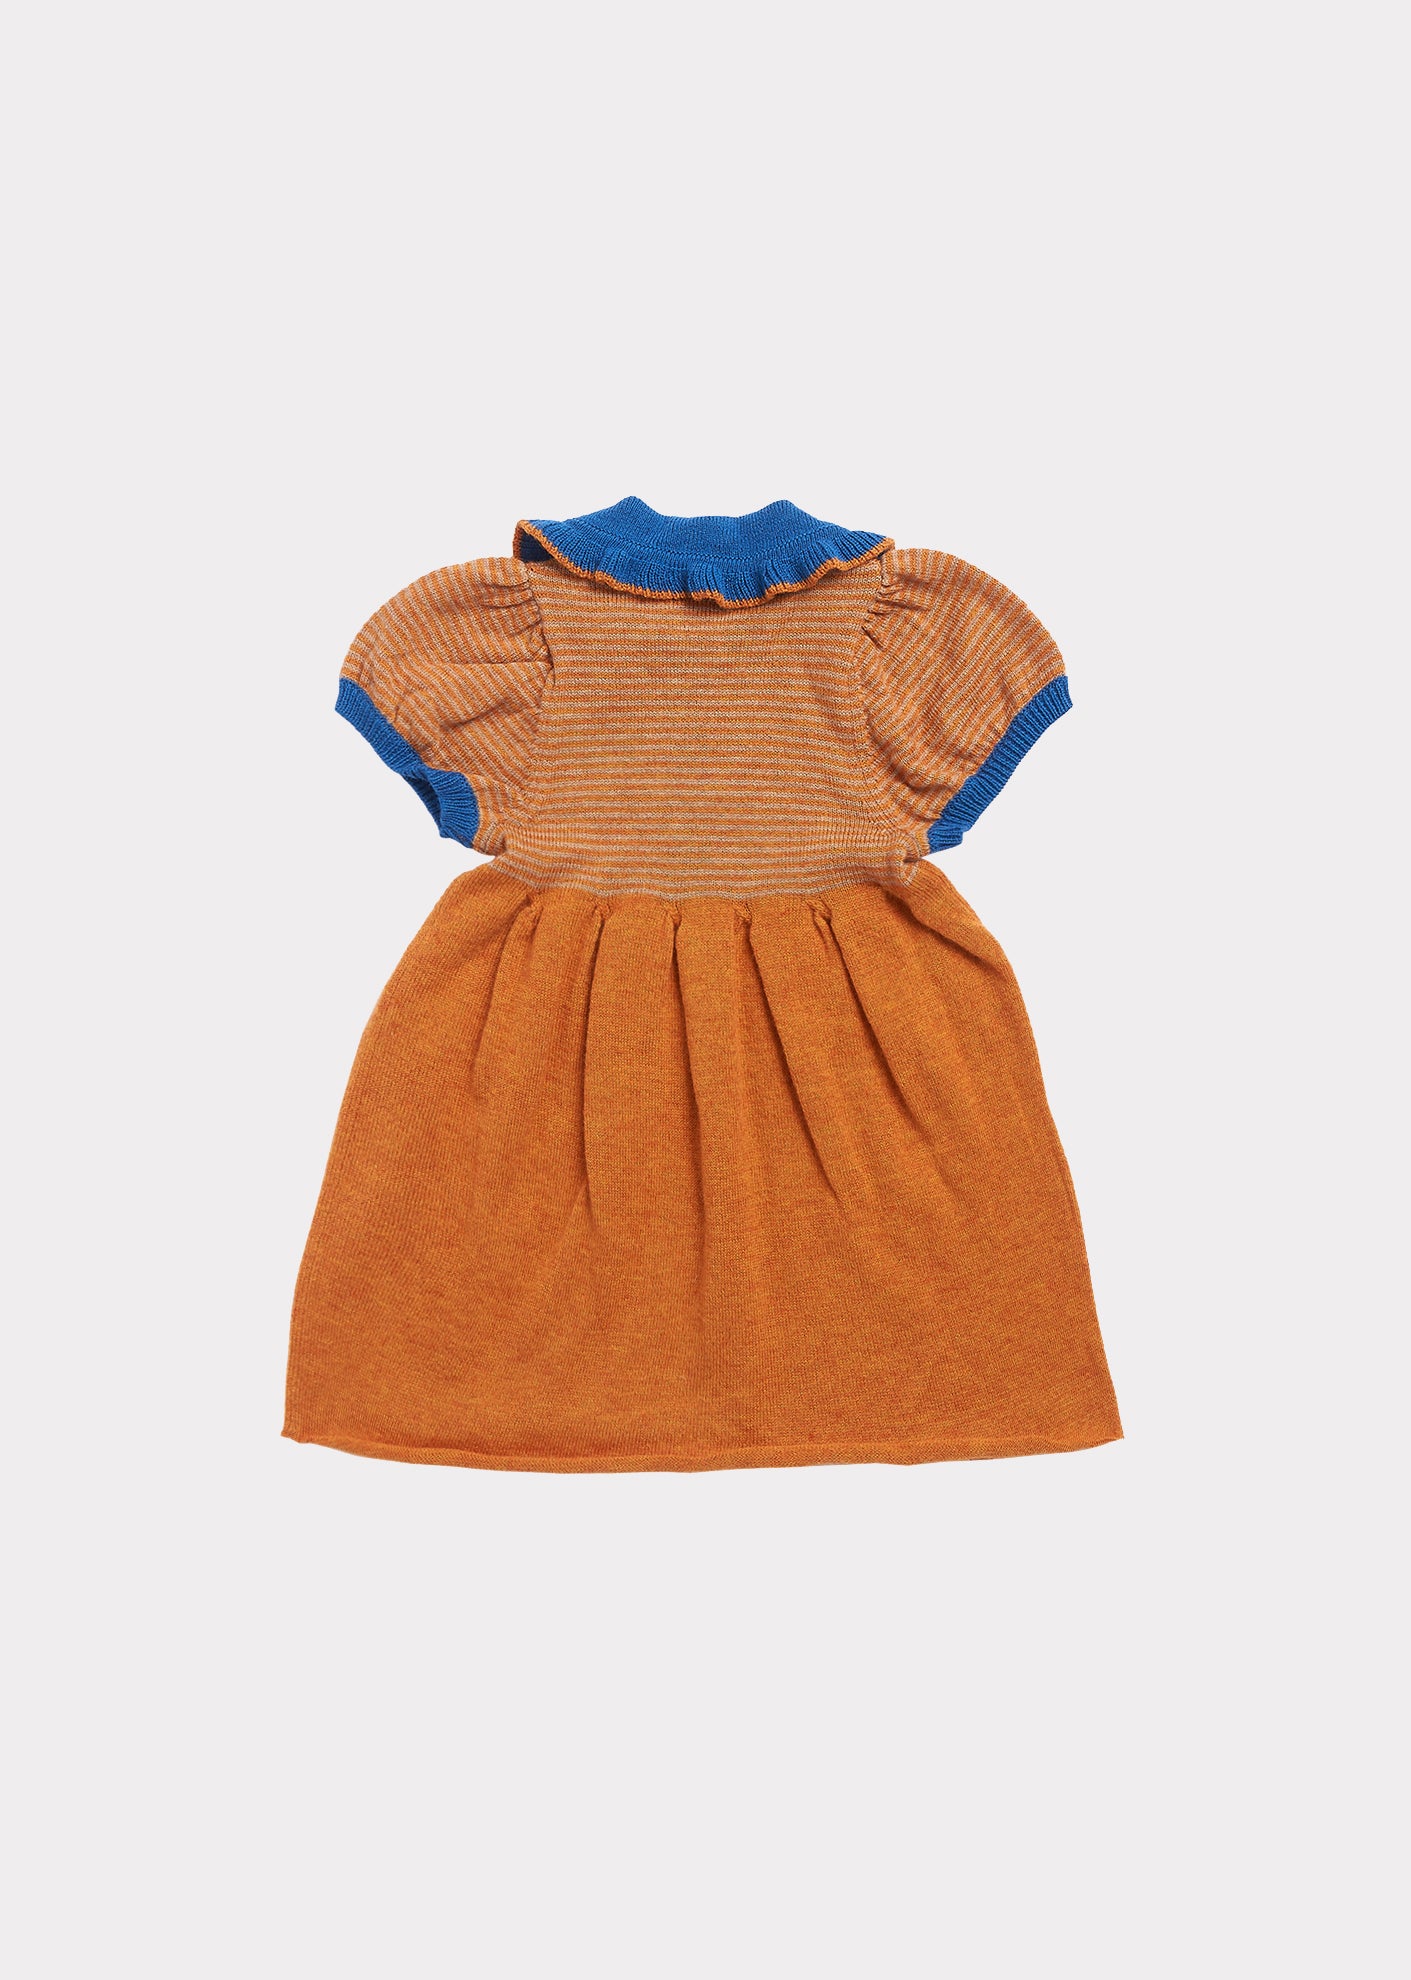 Baby Girls Caramel Knit Cotton Dress